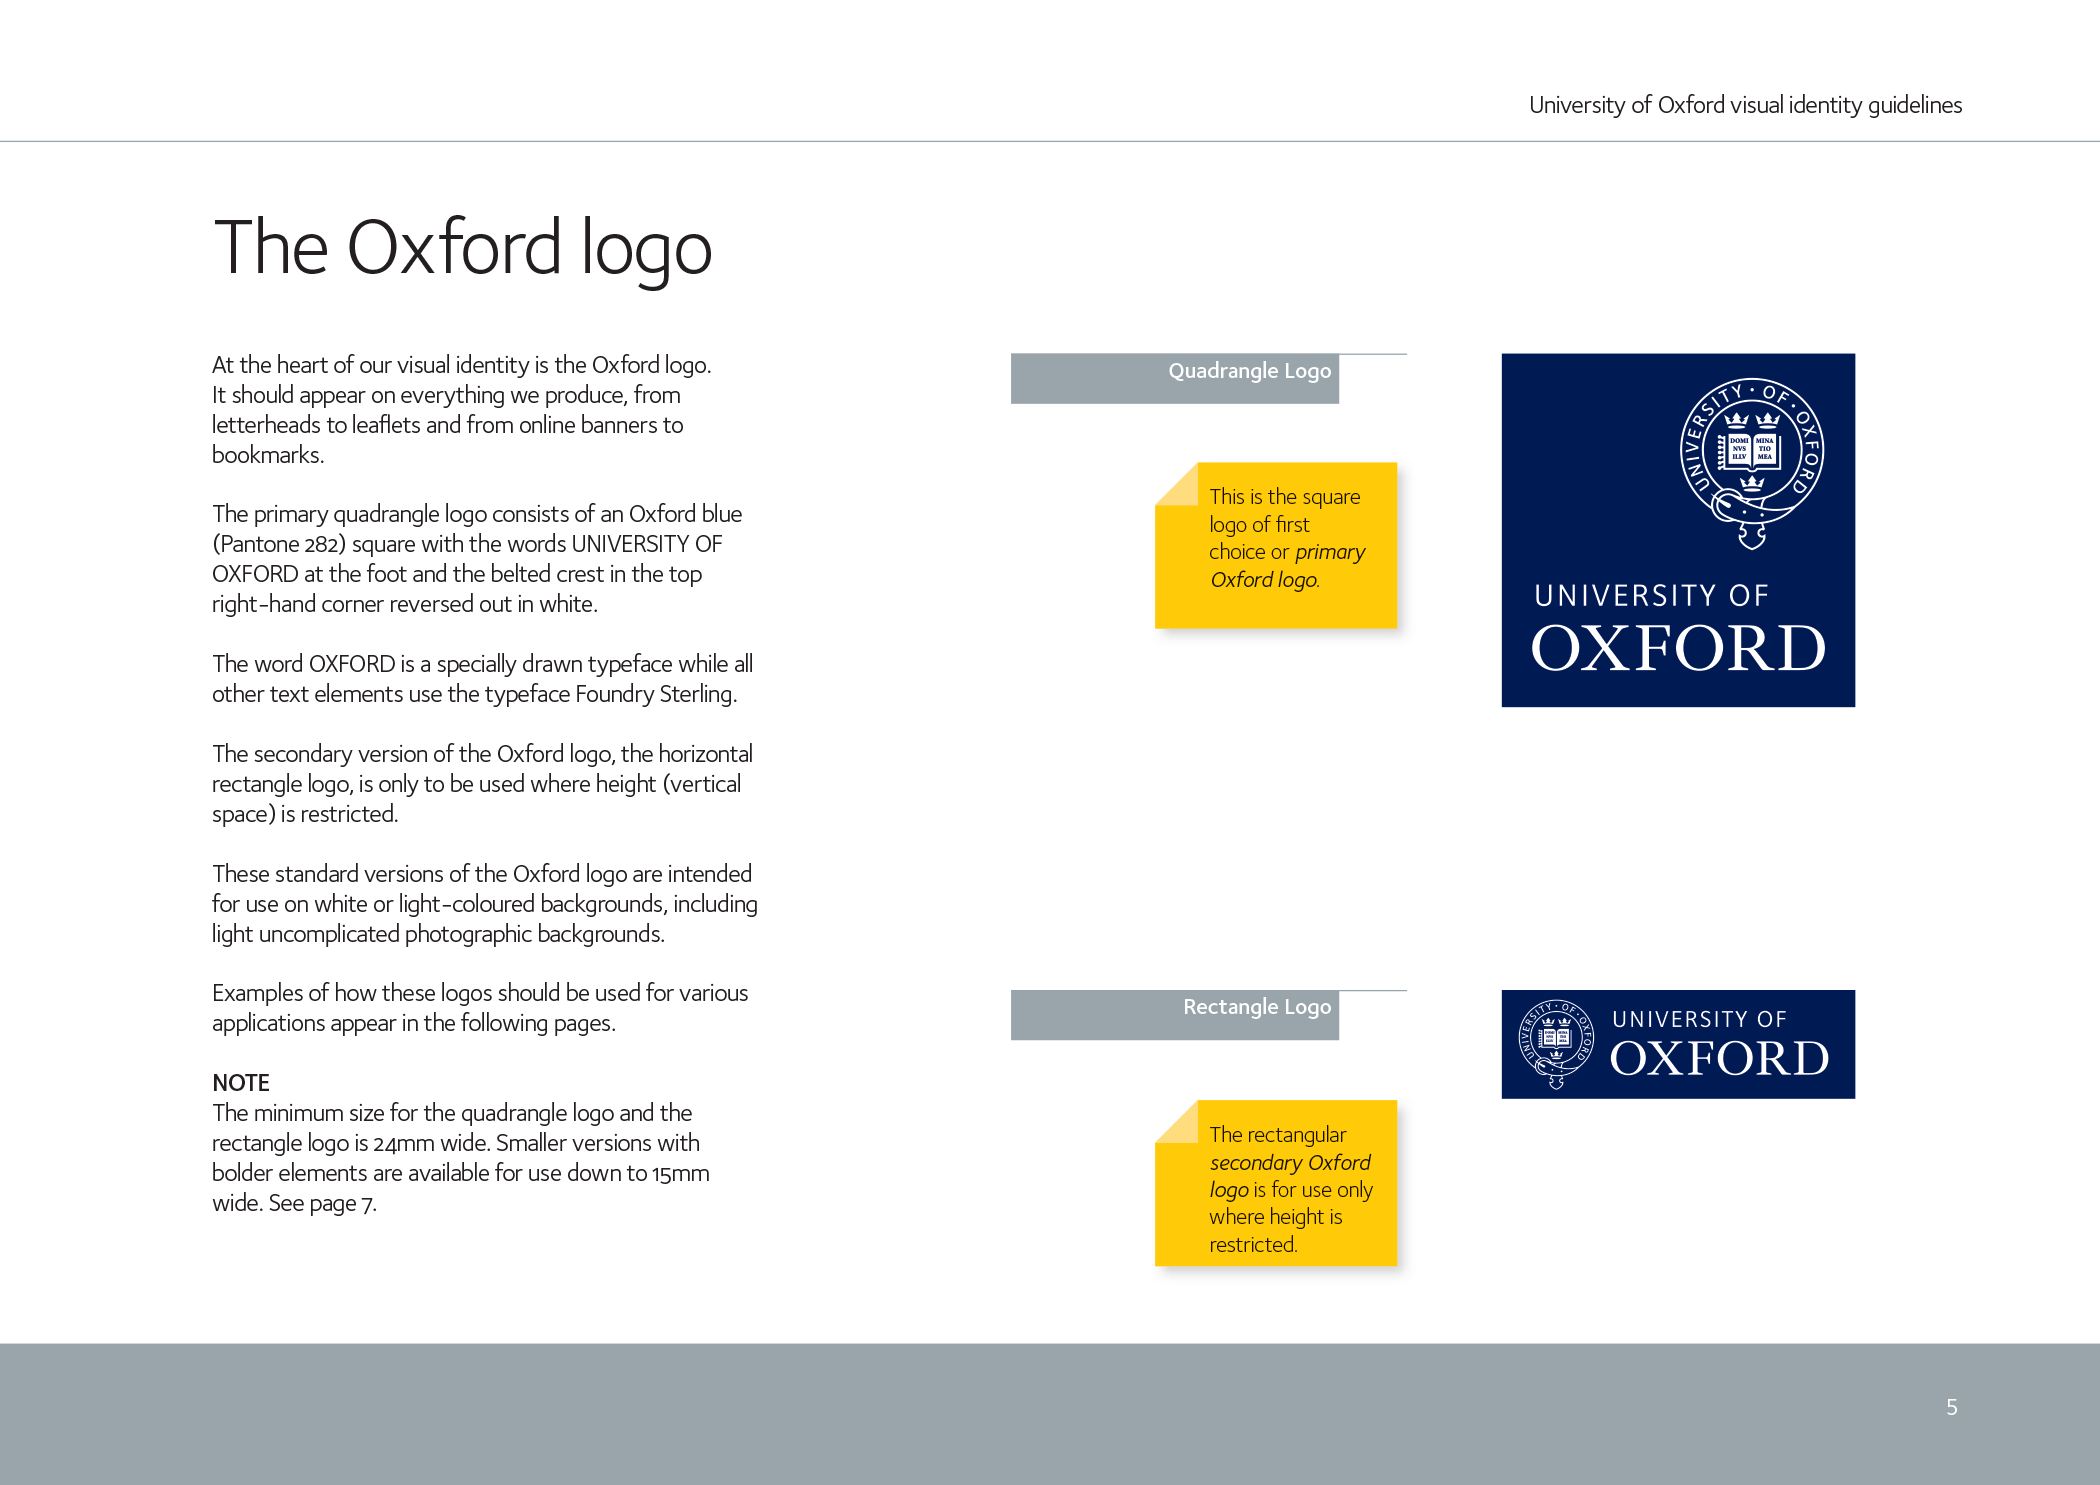 Universityofoxford Logo - University of Oxford visual identity - Fonts In Use